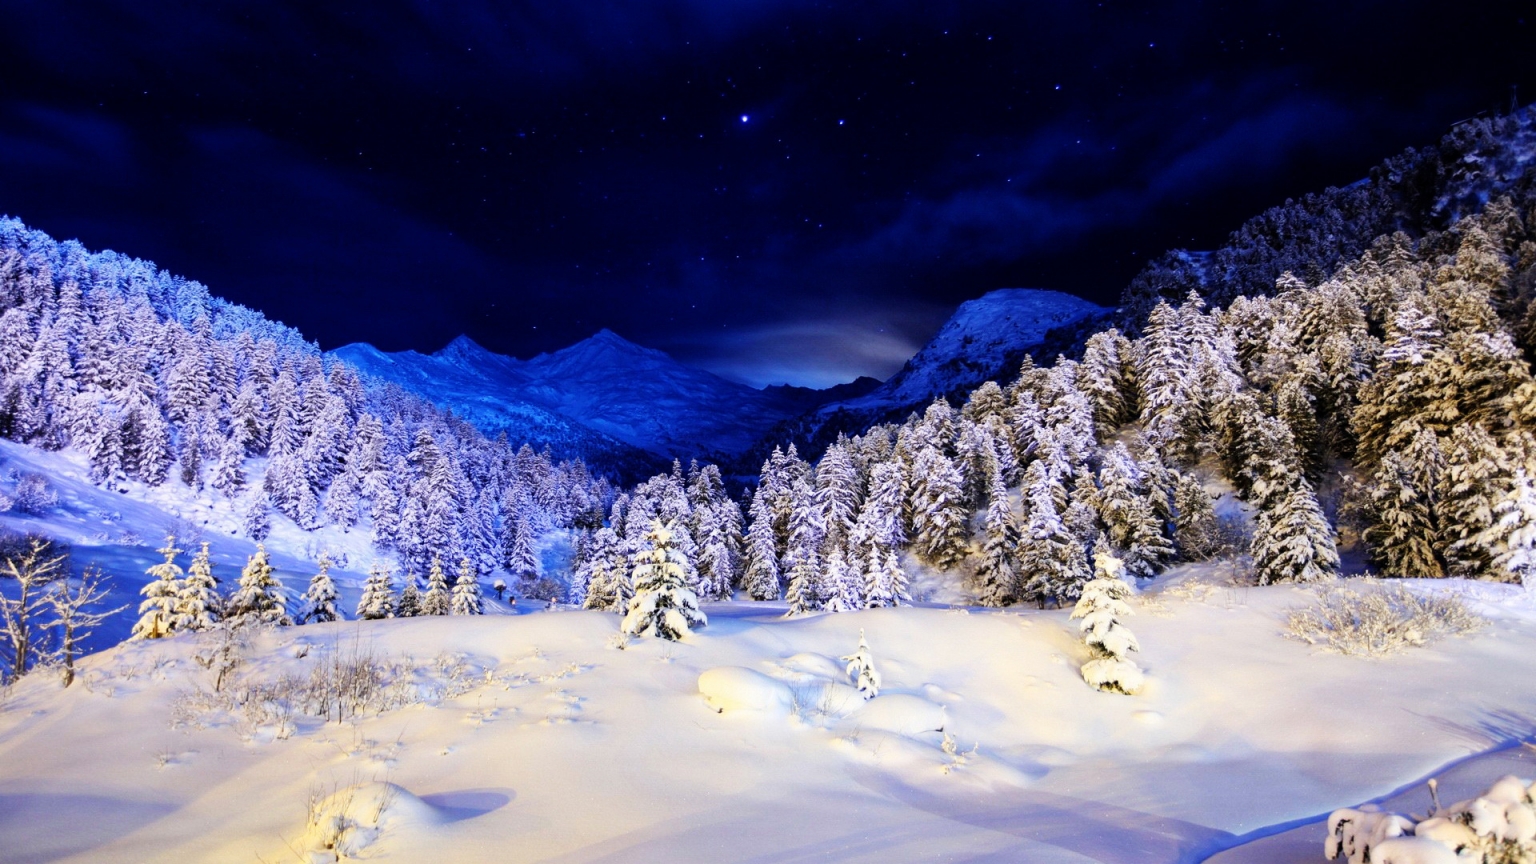 Blue Winter Night for 1536 x 864 HDTV resolution